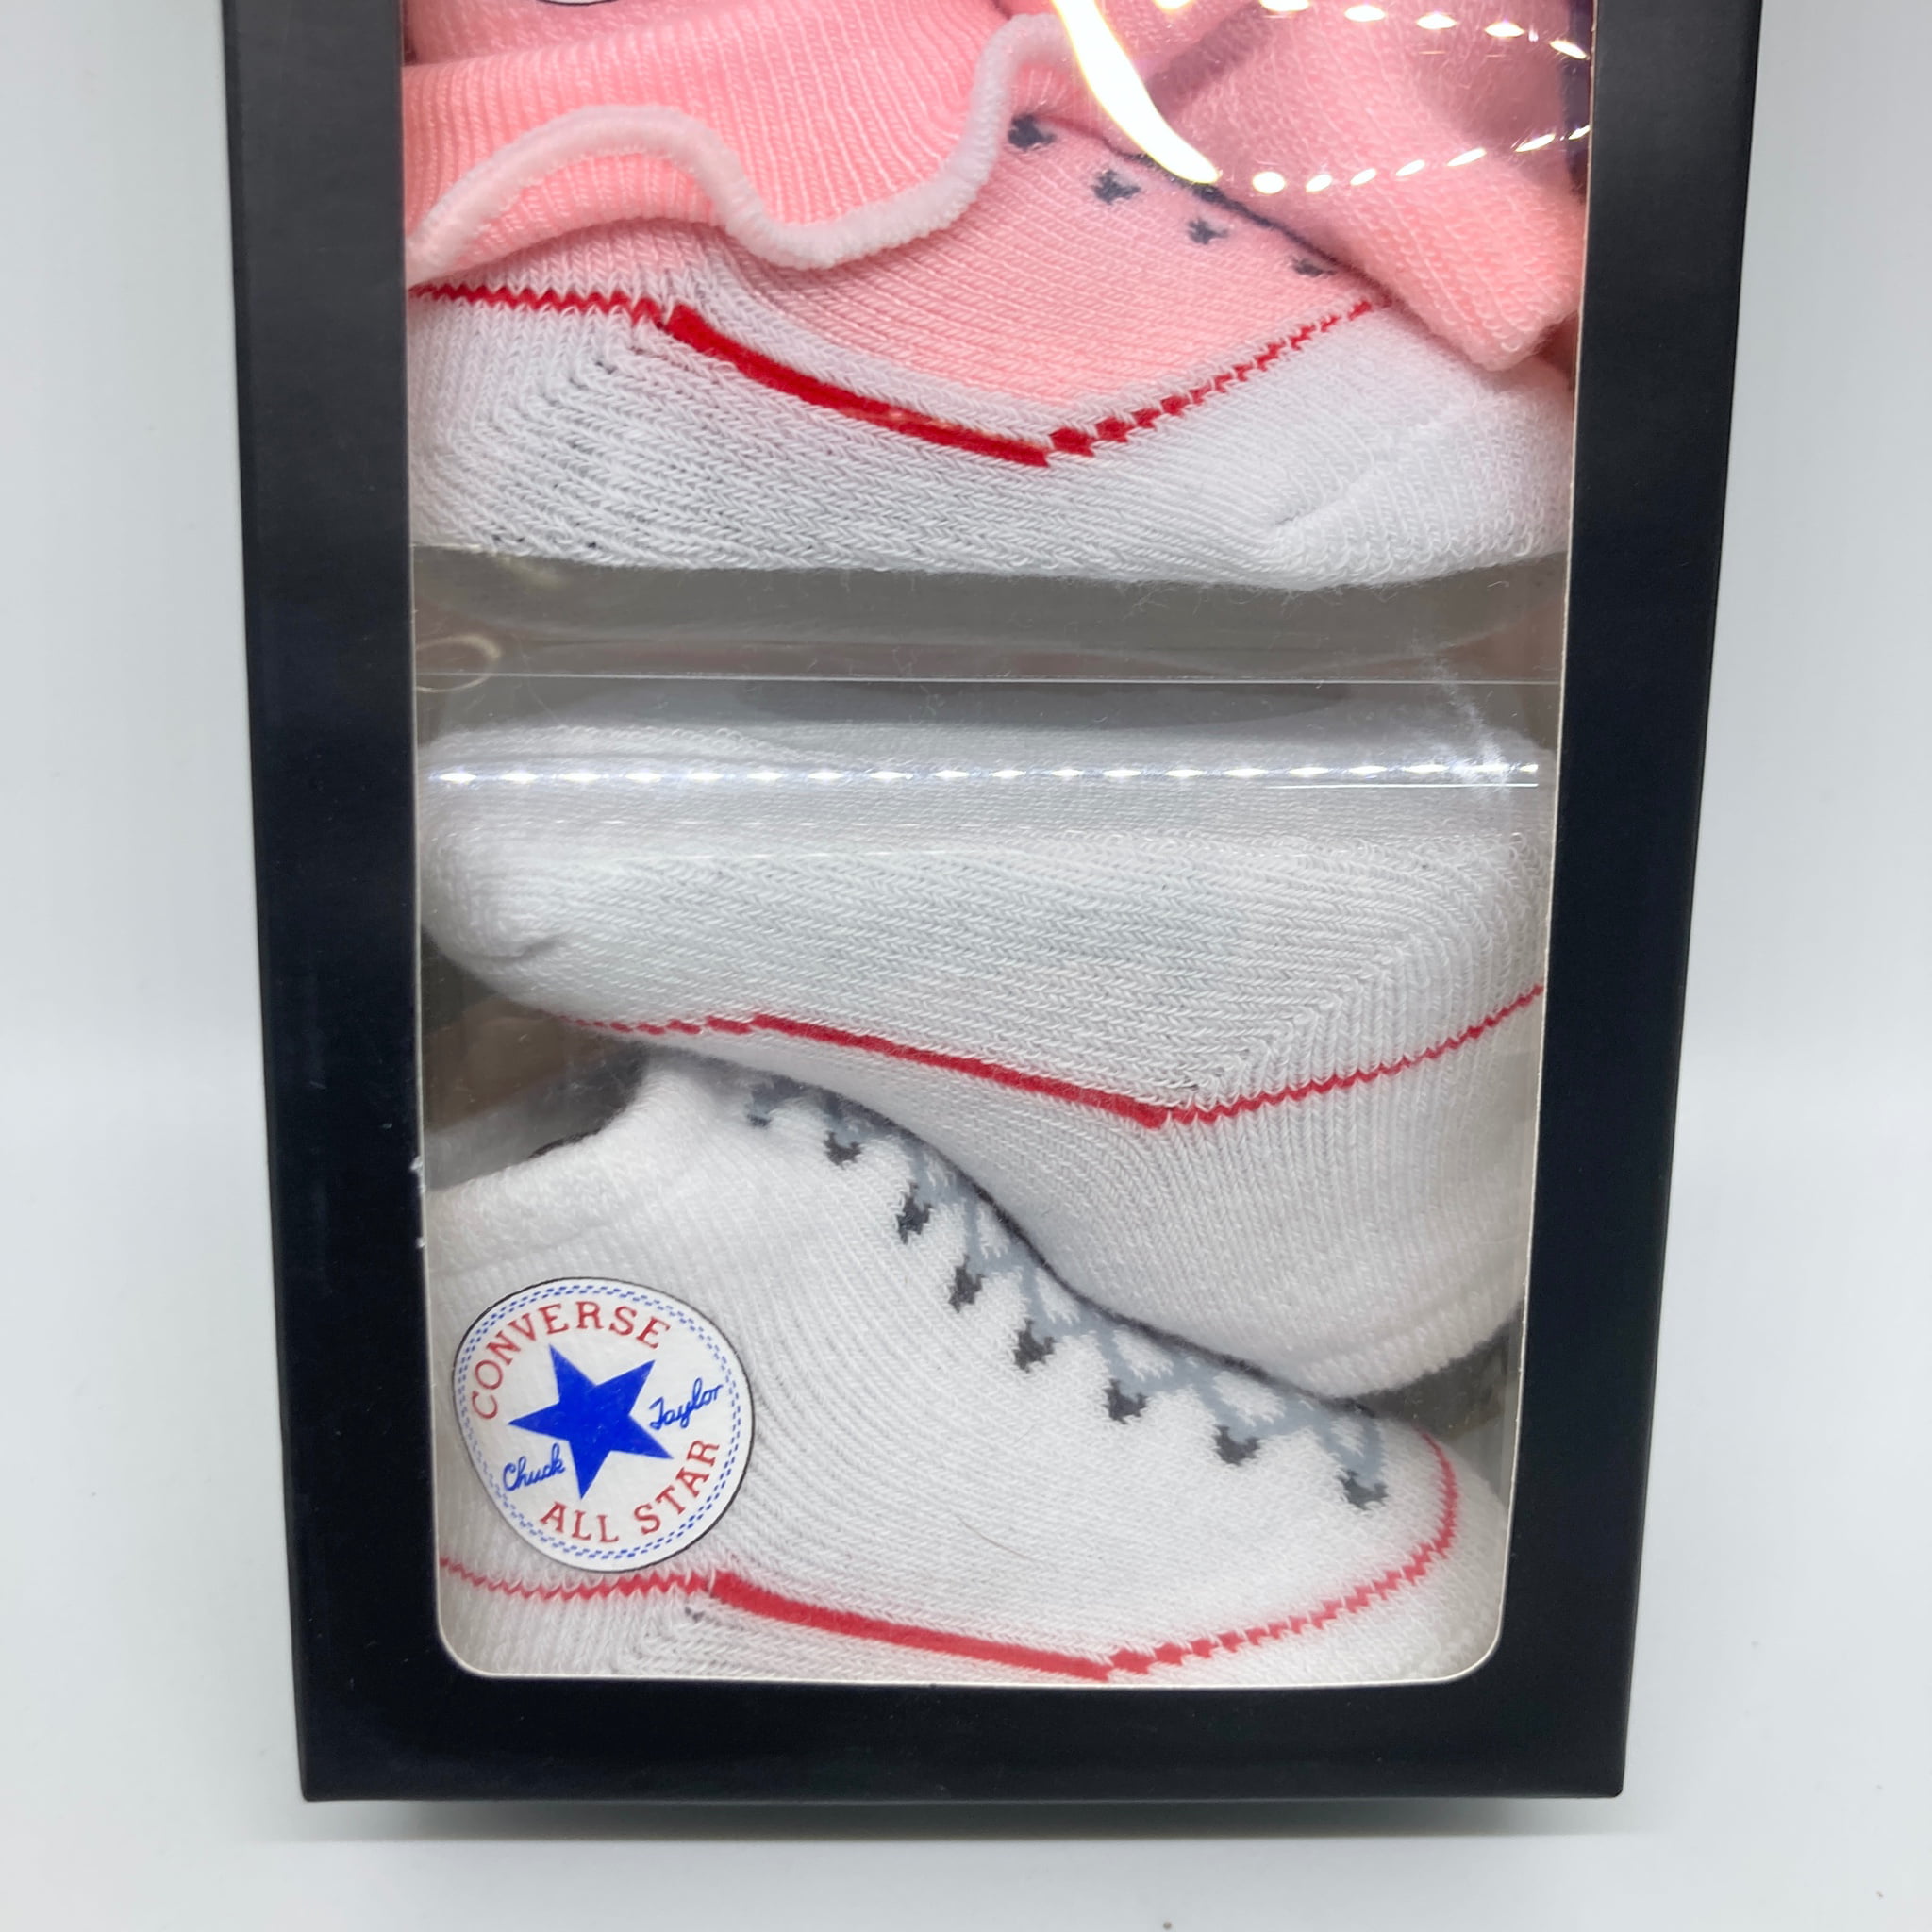 Converse Infant Booties 6-12 Months Ruffle Pink / White Socks Walmart.com